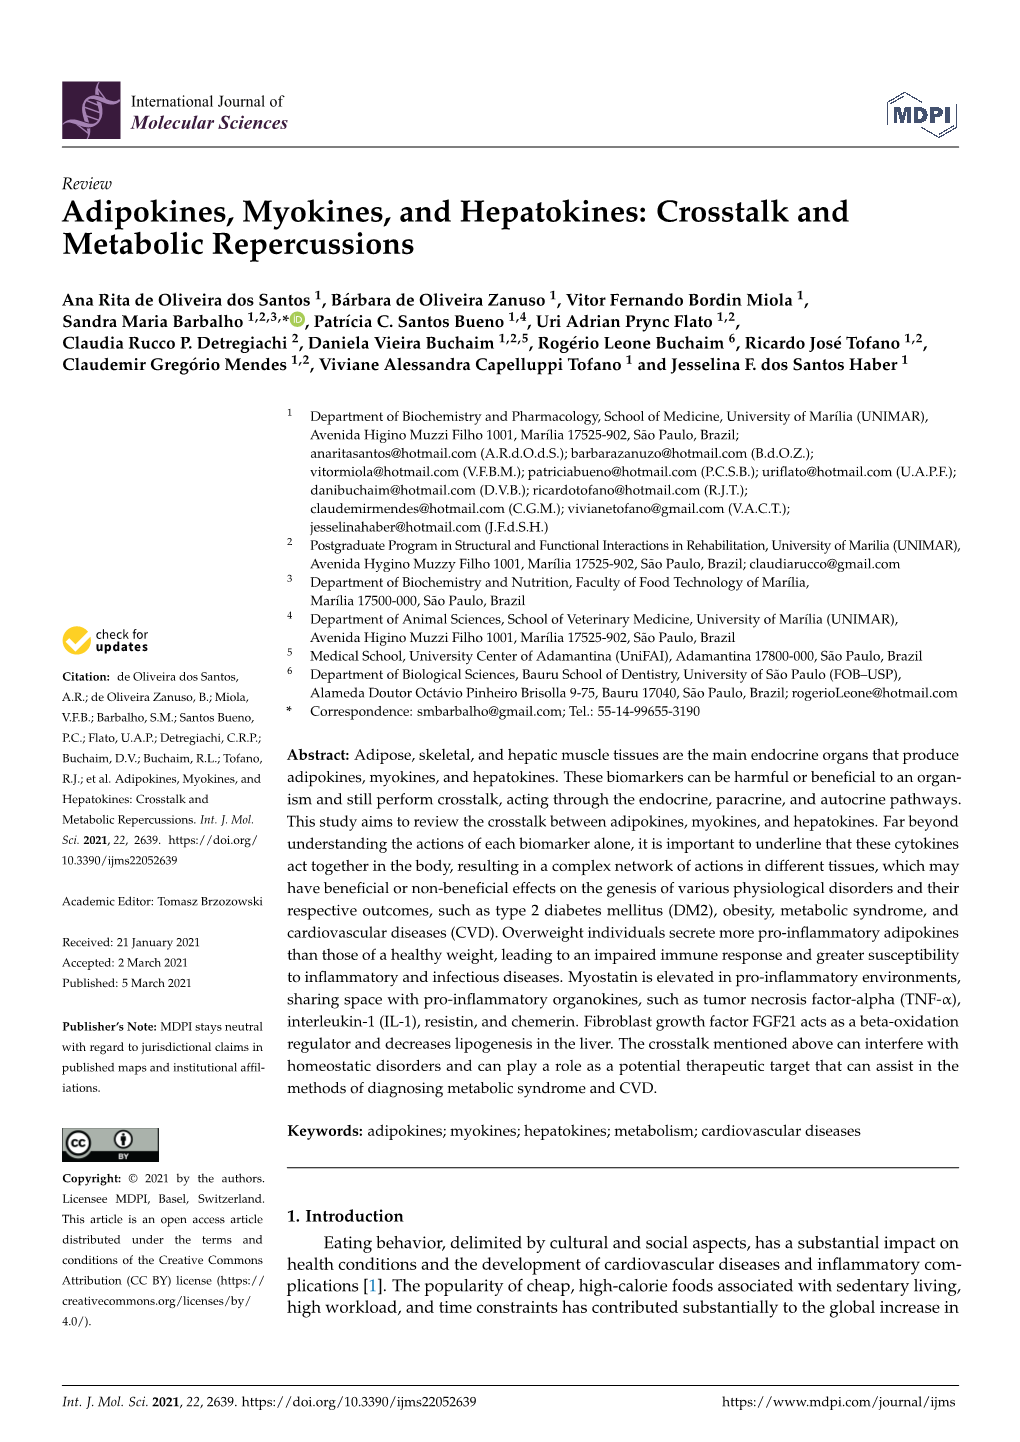 Adipokines, Myokines, and Hepatokines: Crosstalk and Metabolic Repercussions